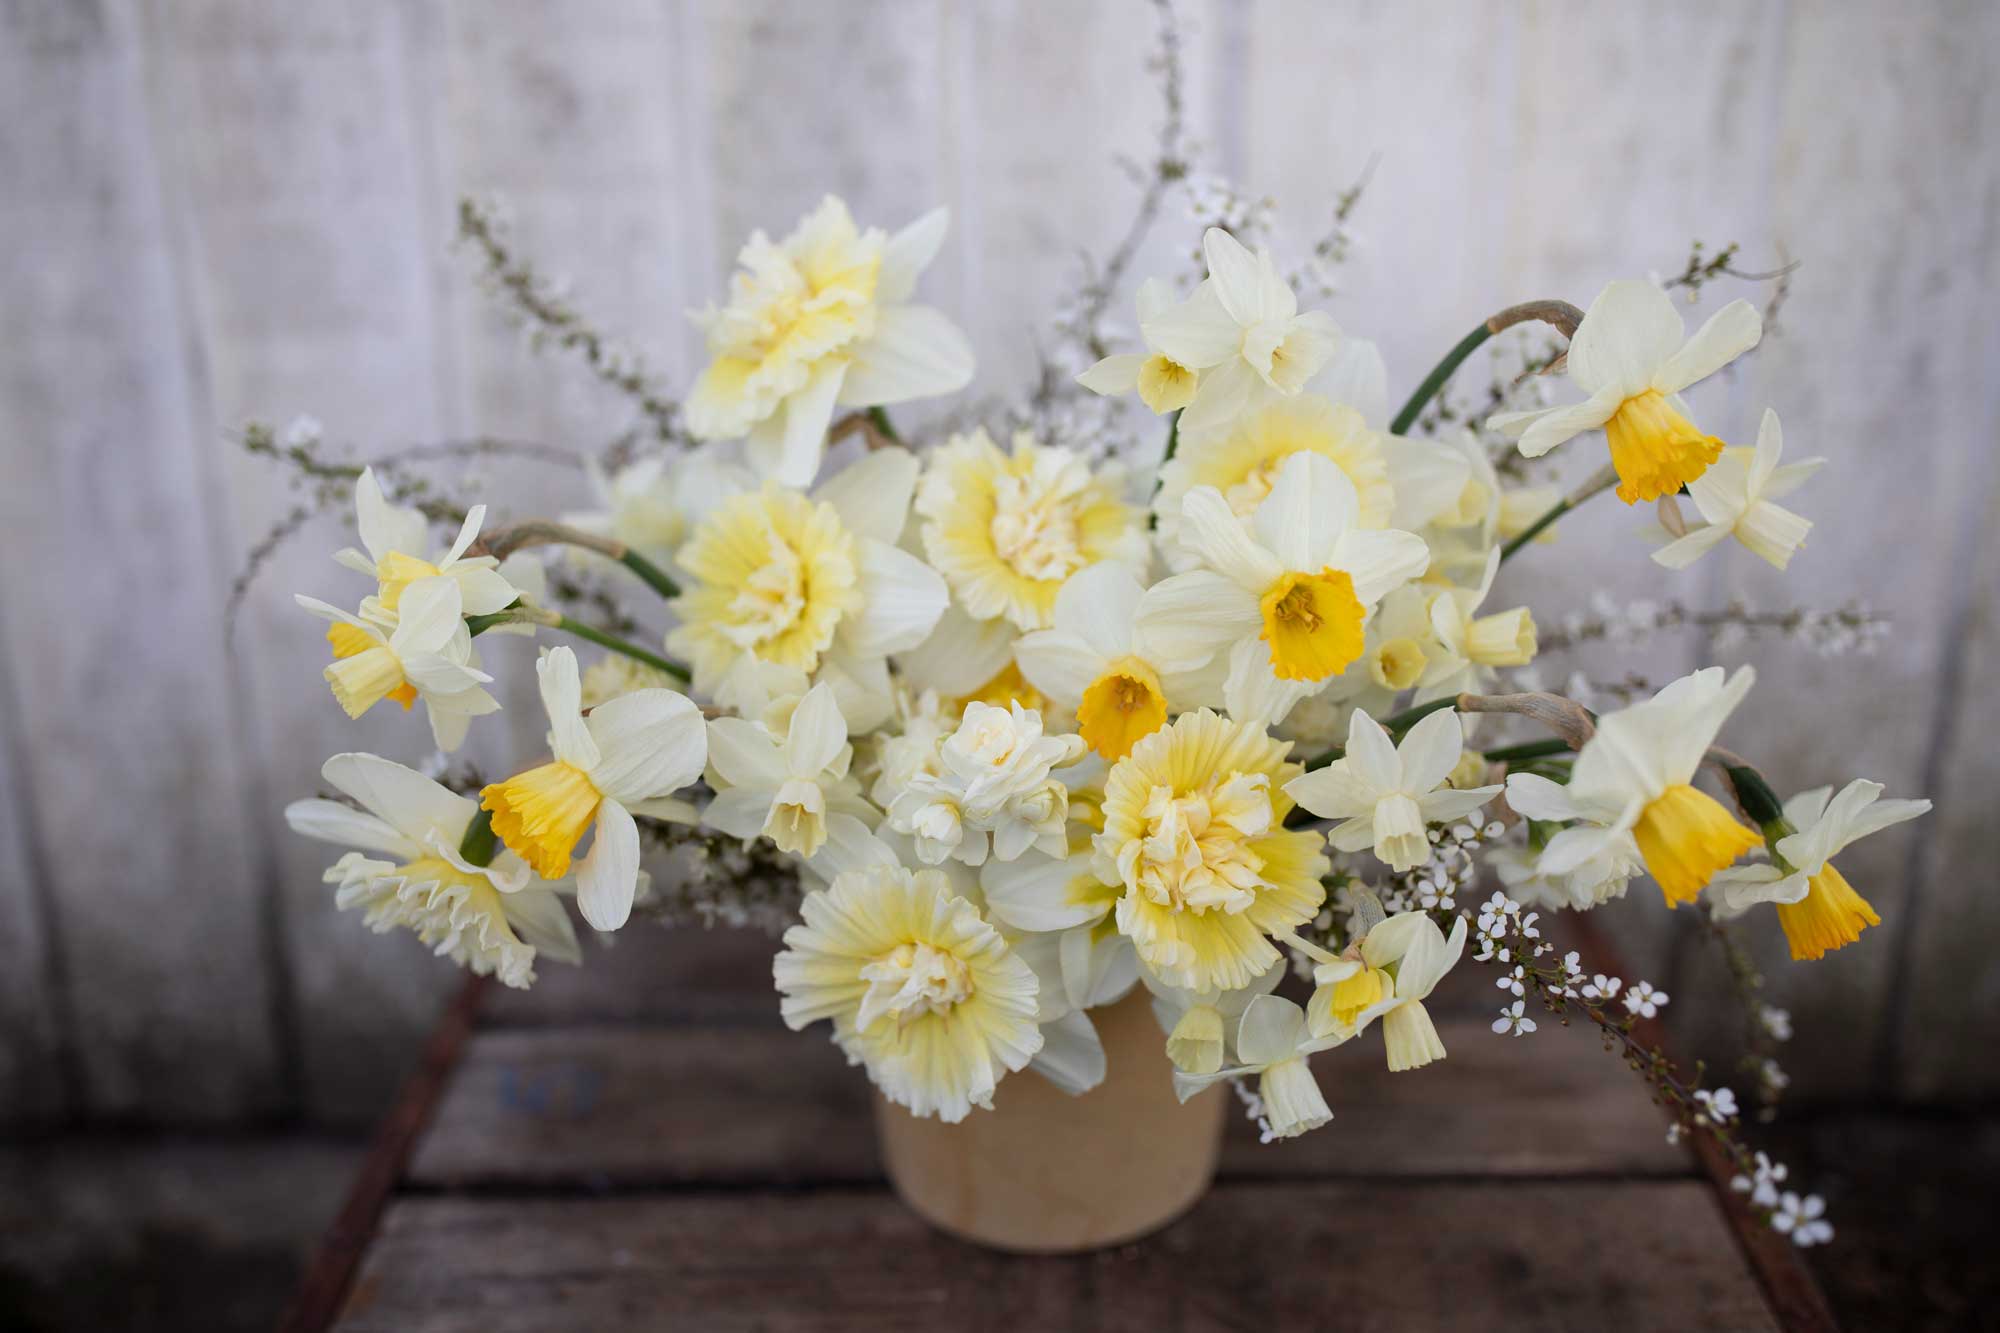 An arrangement of daffodils